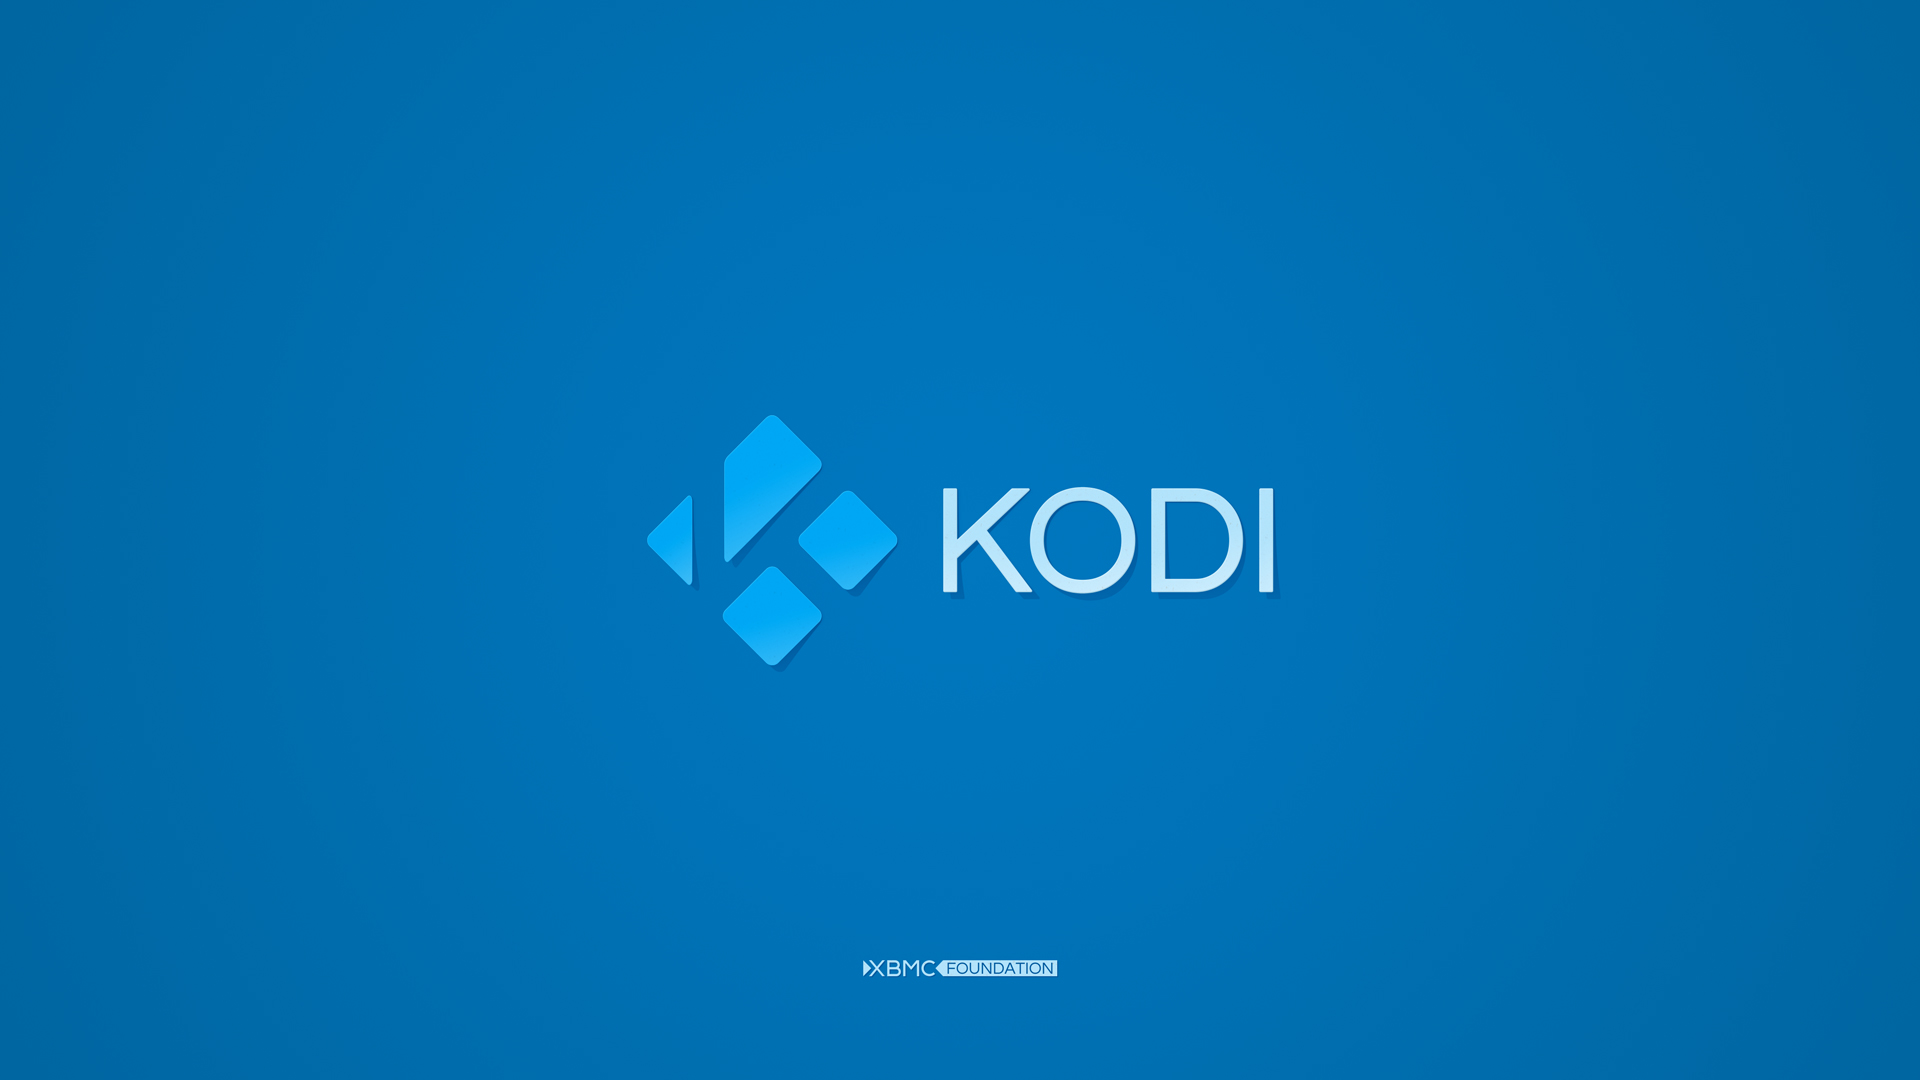 File:Kodi-Wallpaper-17B-1080p samfisher.jpg